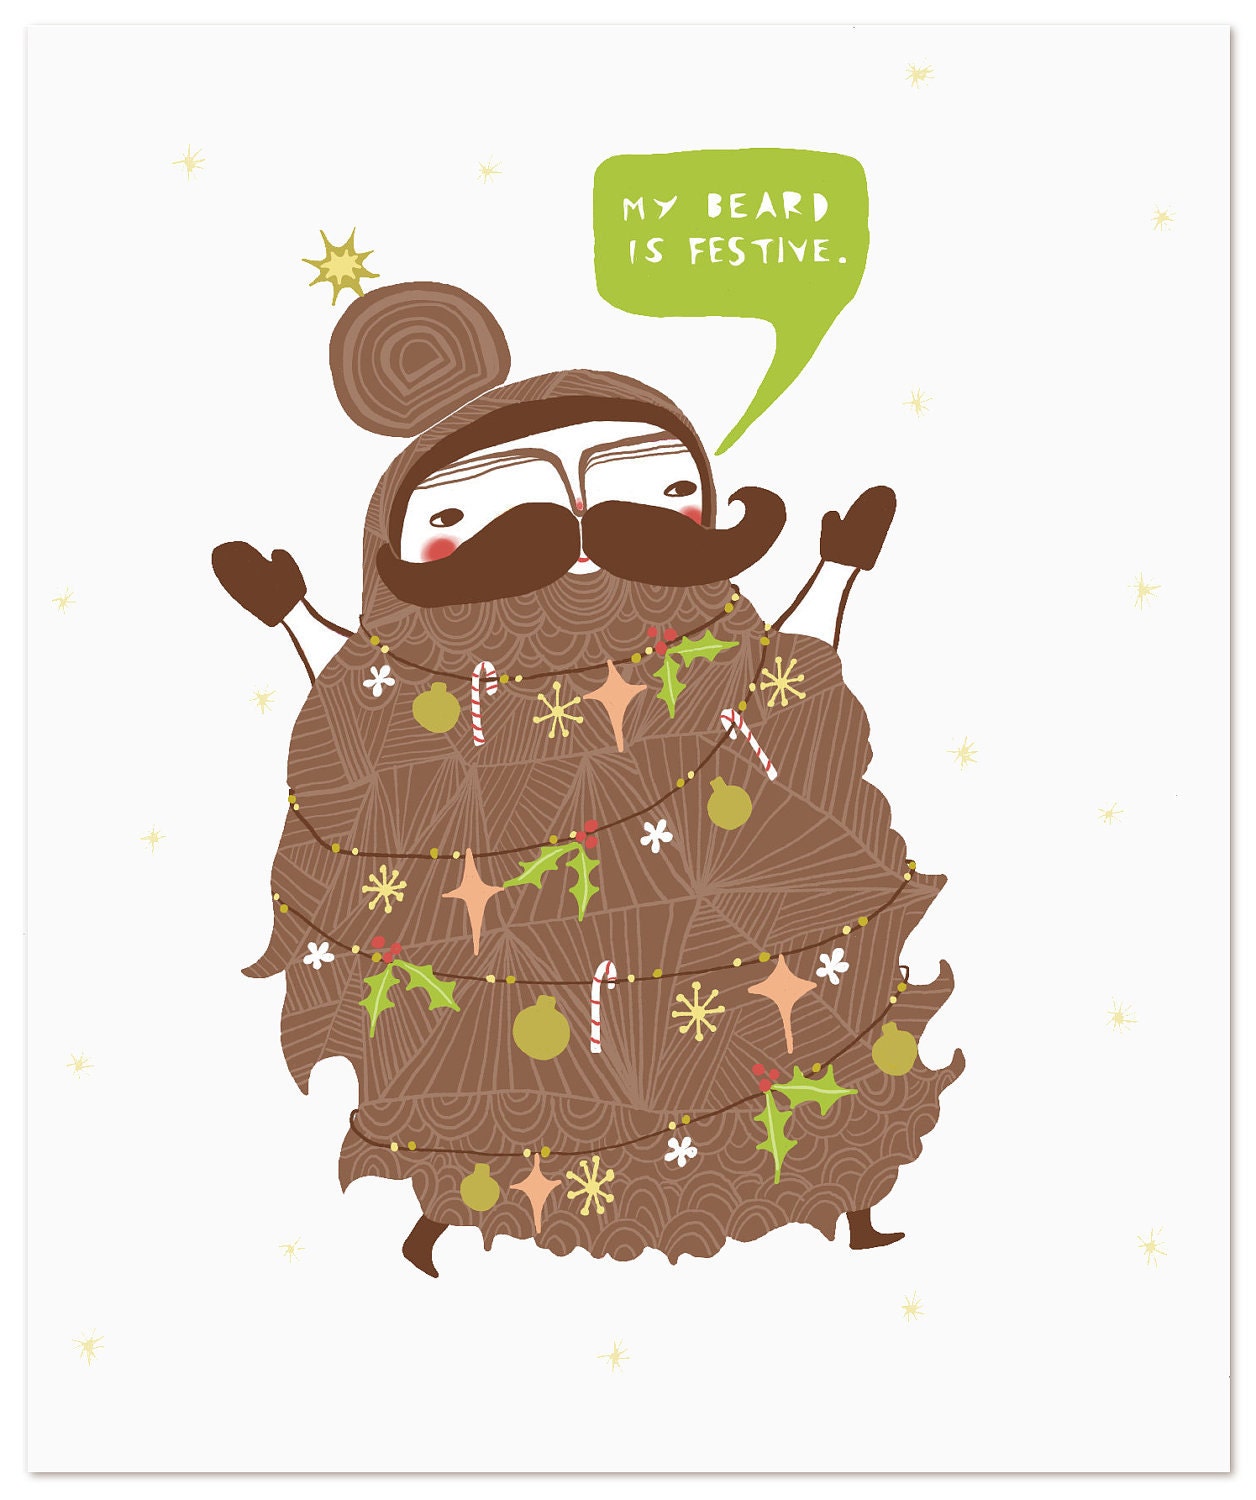 Festive Beard - greeting card